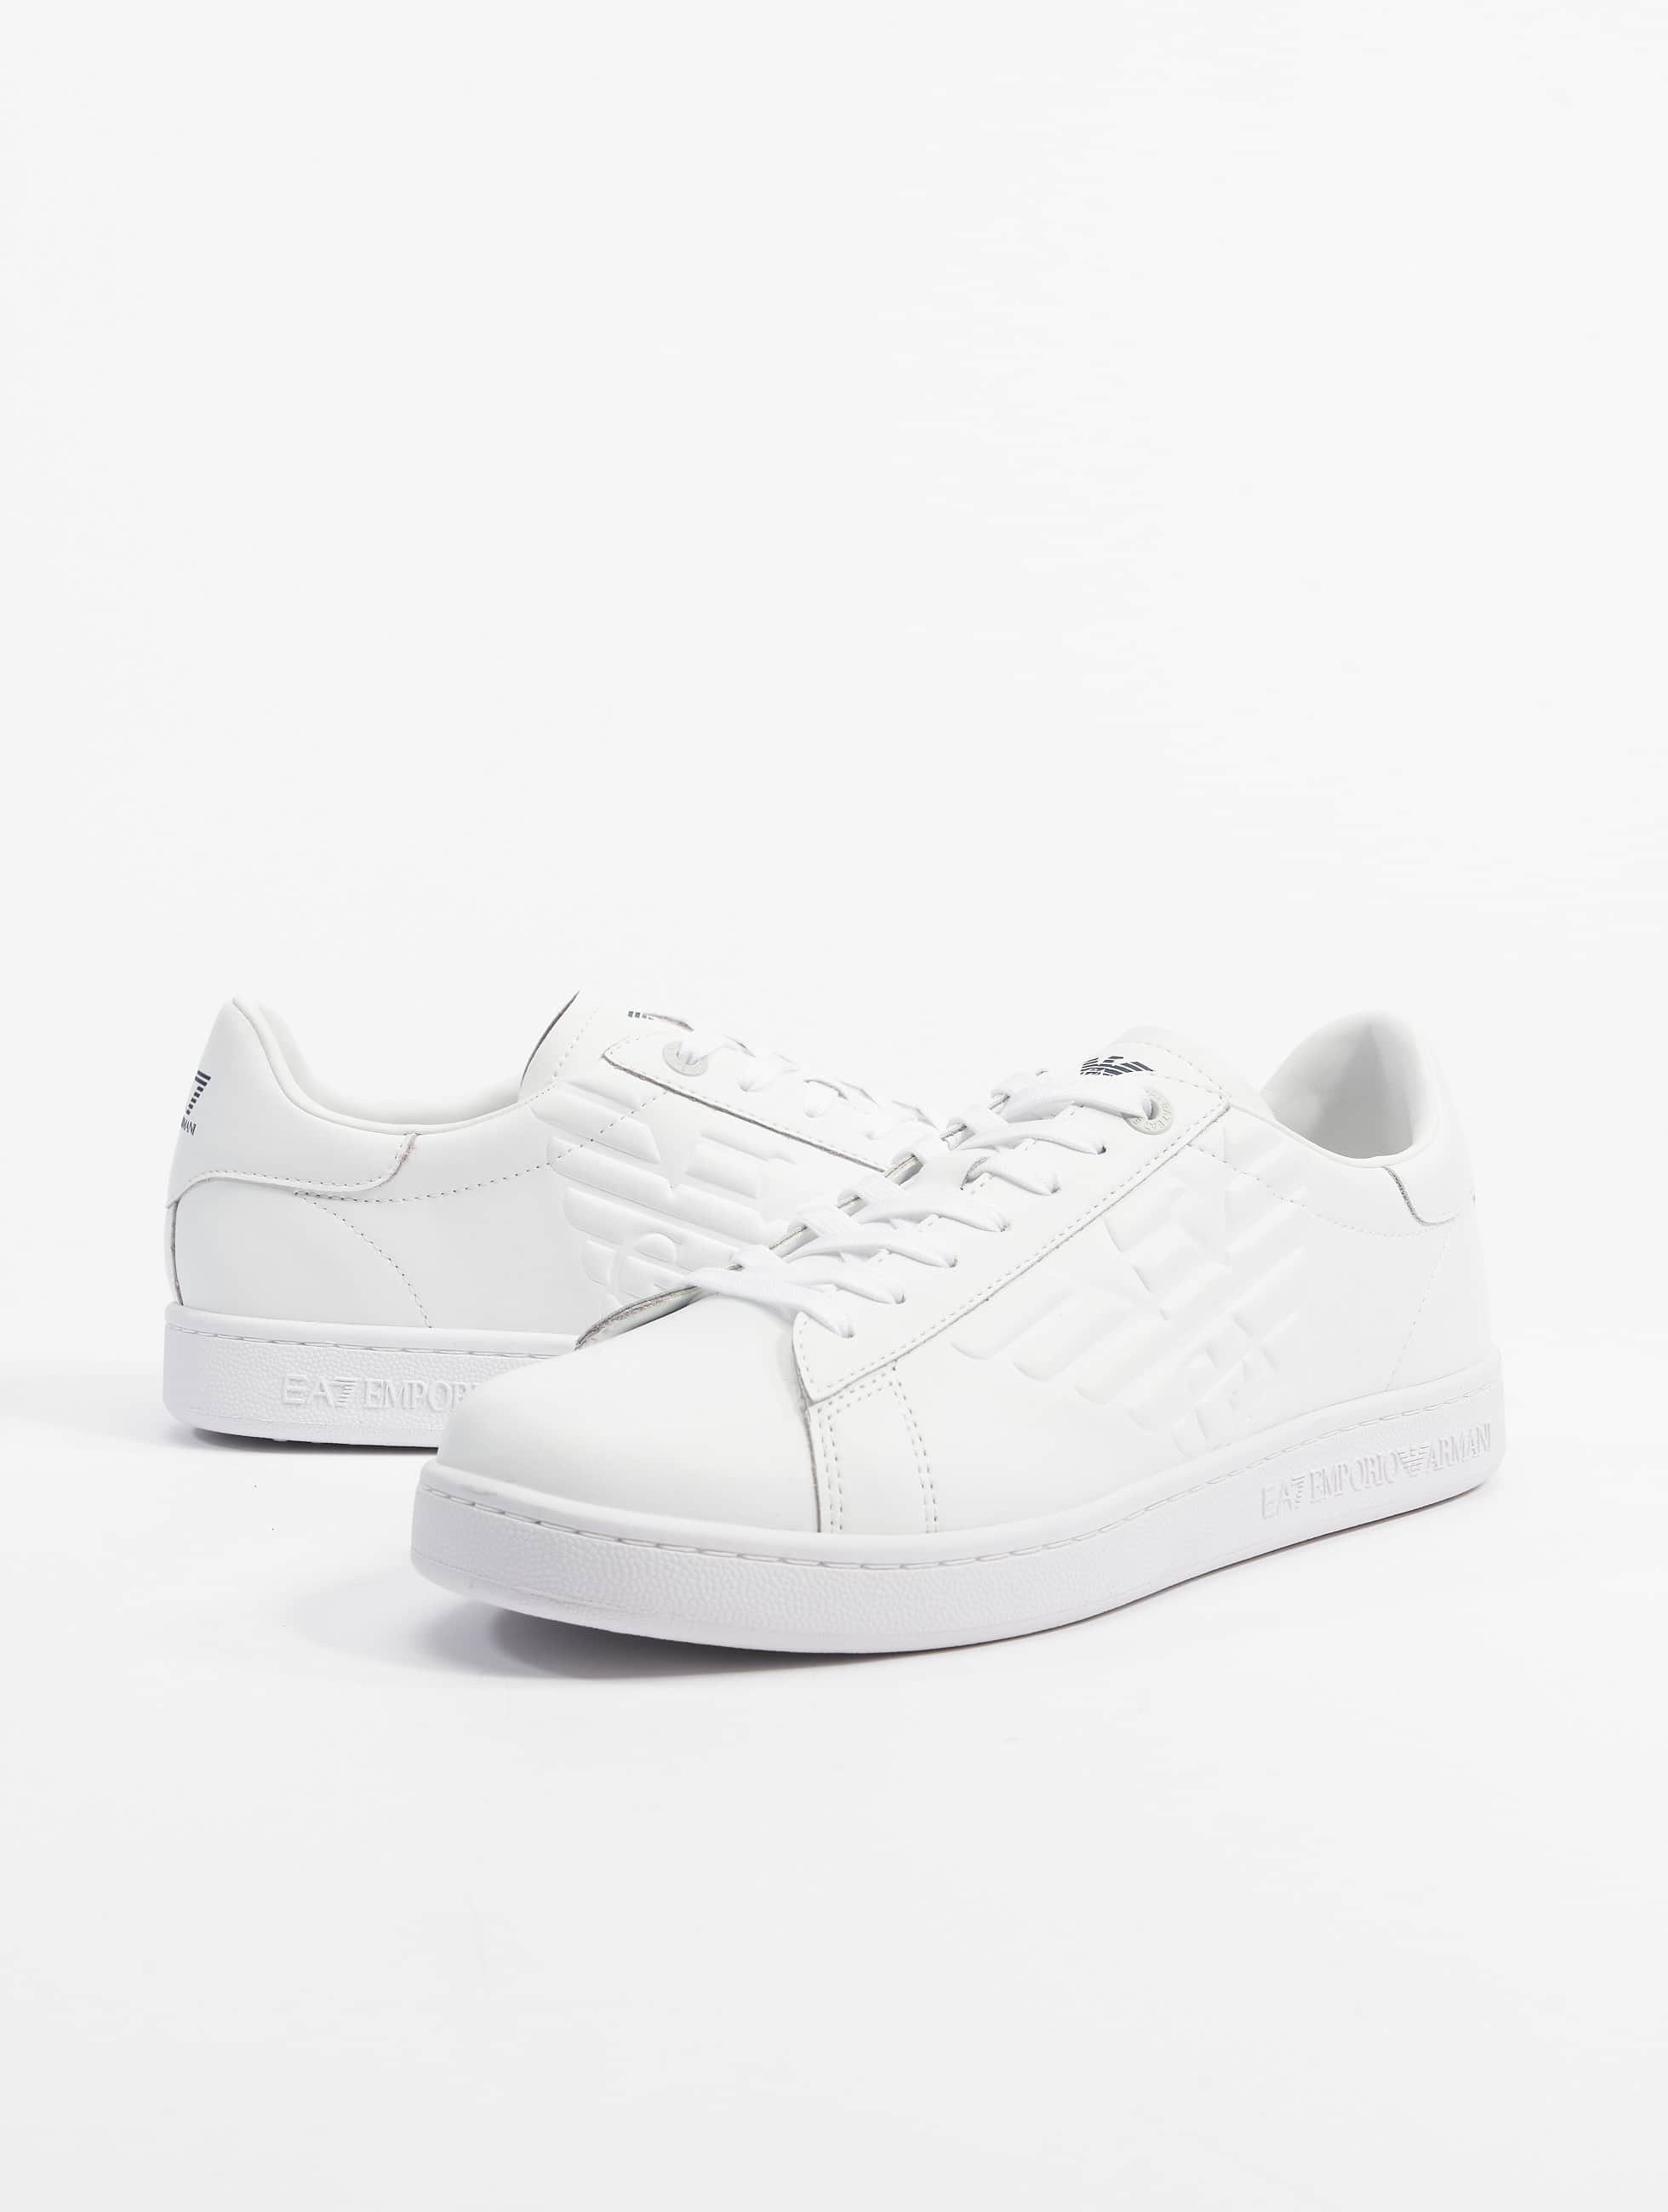 Armani Shoe / Sneakers Classic New CC in white 904008